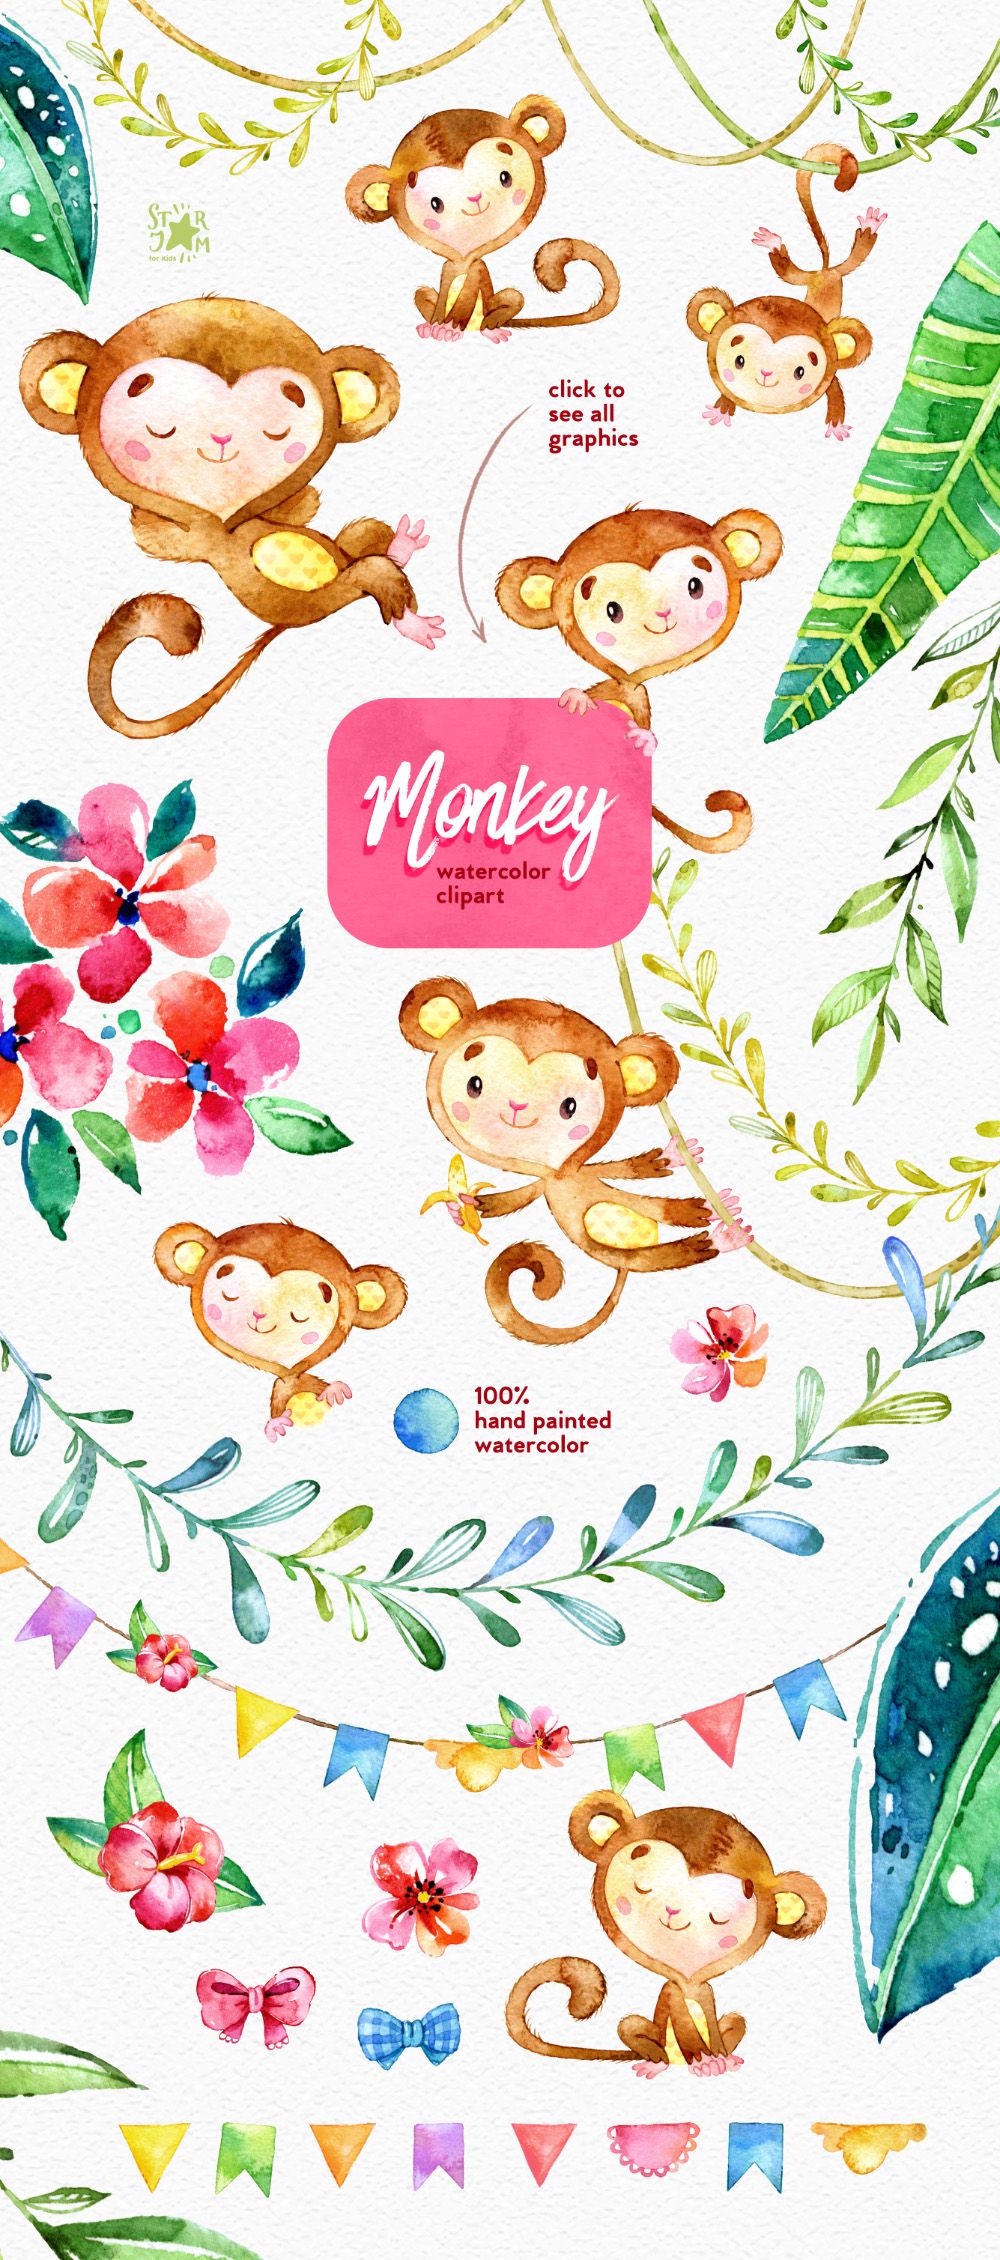 monkey clipart watercolor